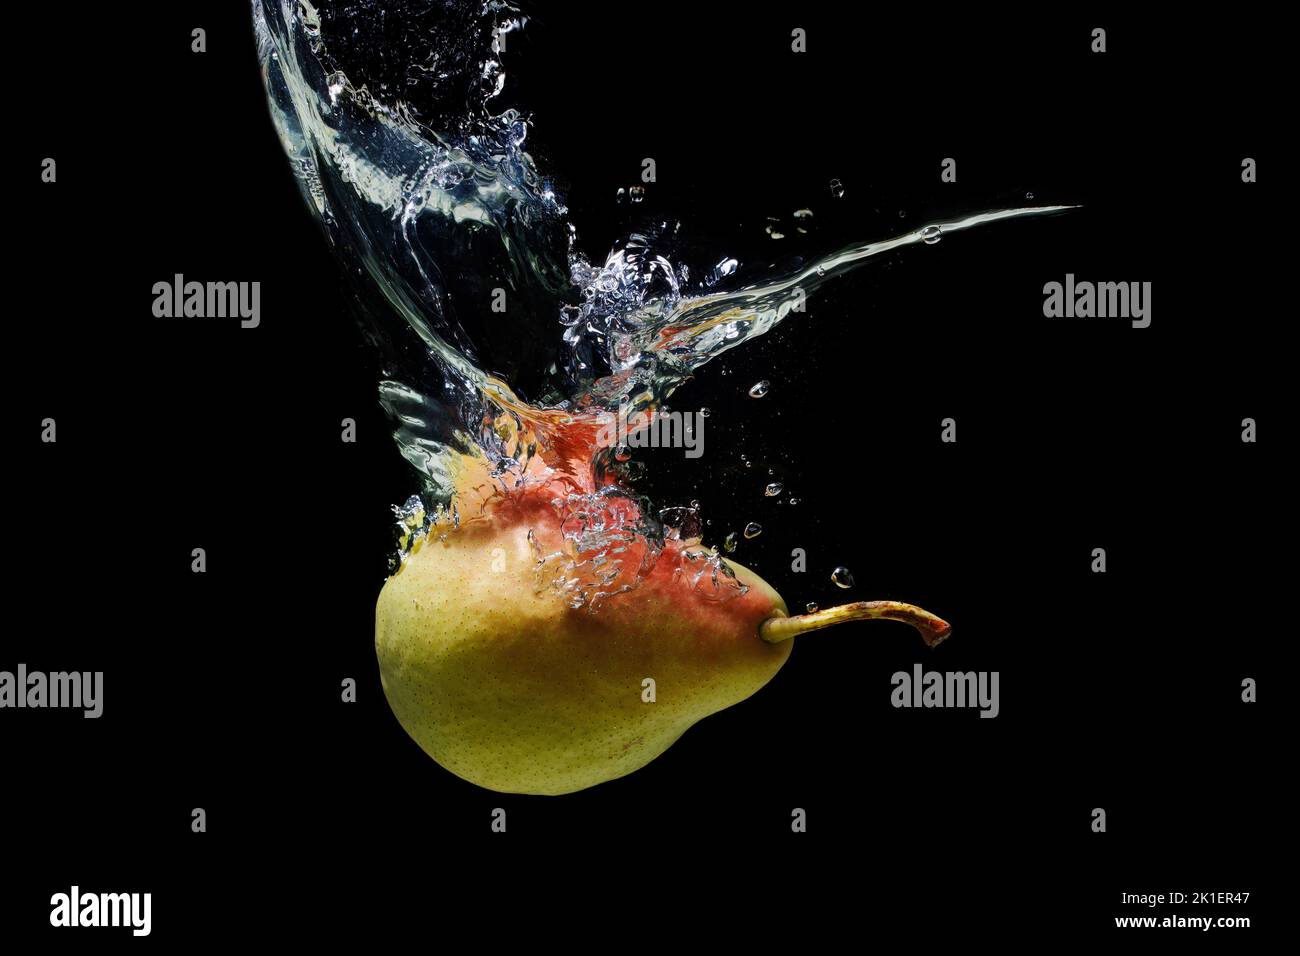 Ripe whole pear falling underwater with splashes isolated on black background. Stock Photo